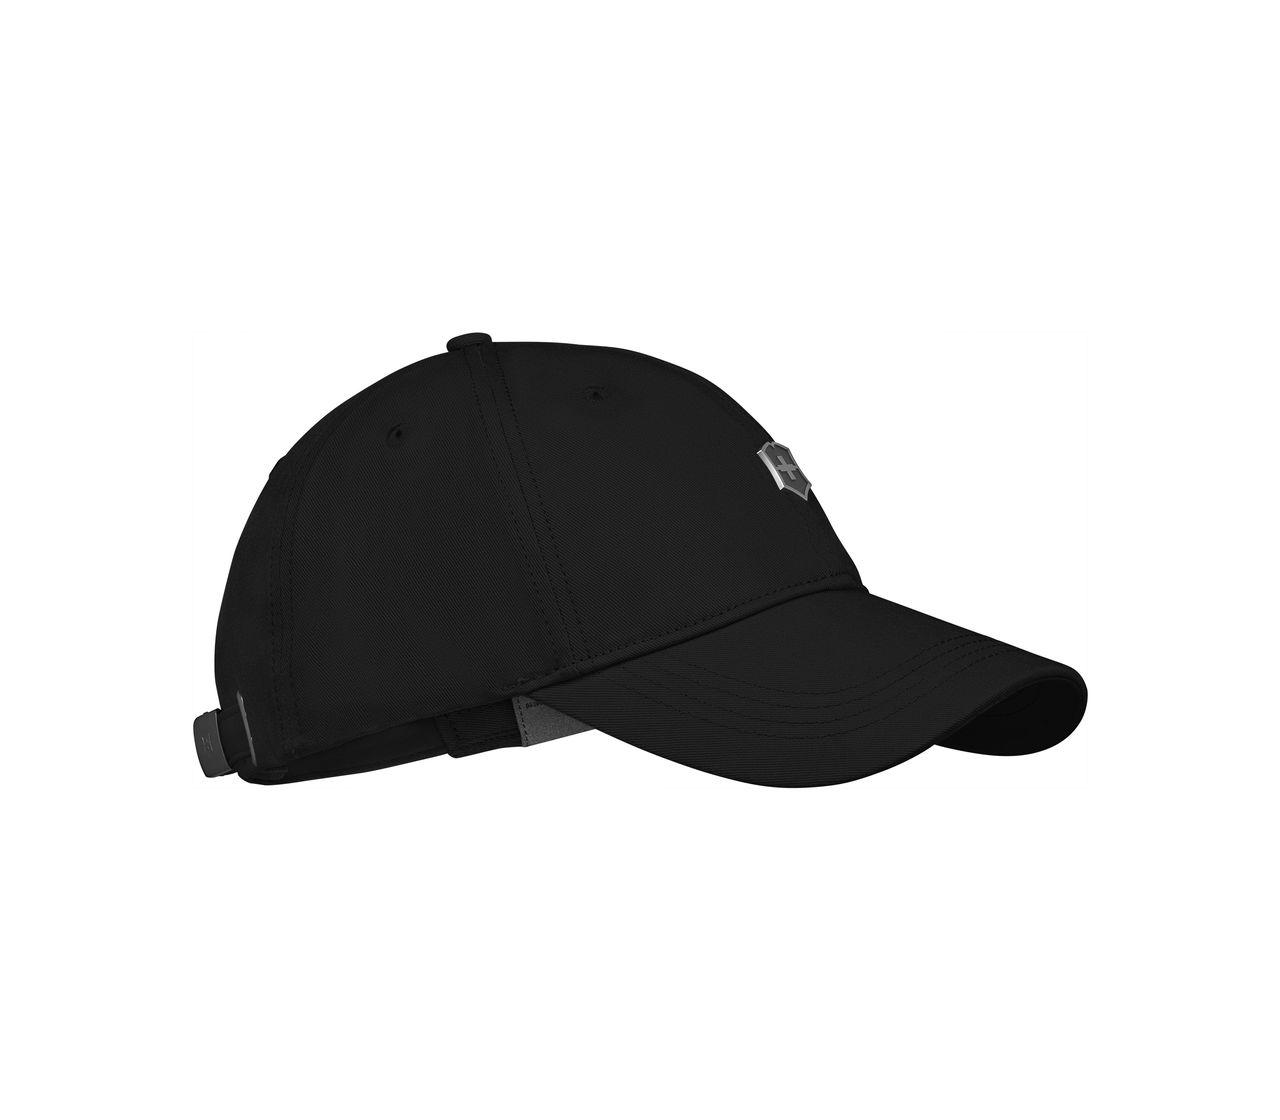 Victorinox Victorinox Brand Collection Golf Cap in black - 611023